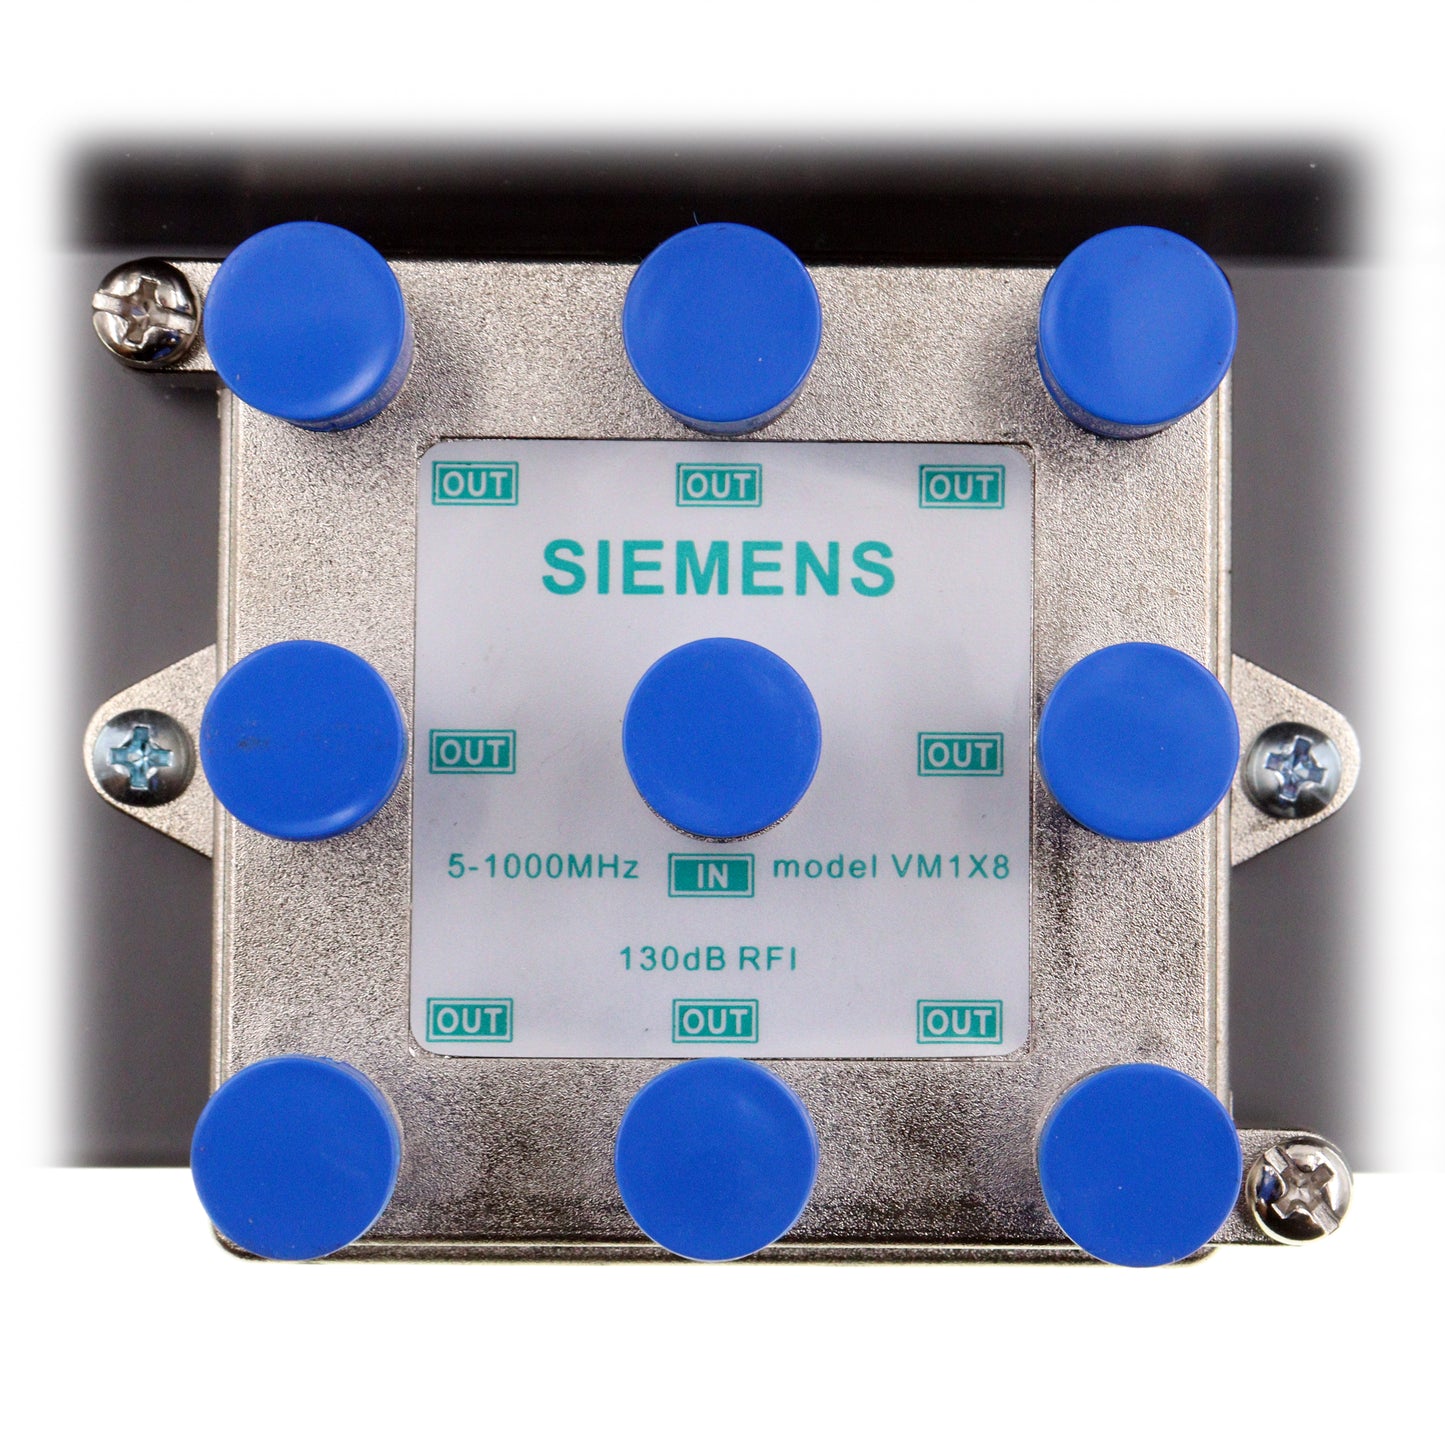 Siemens VM1X8